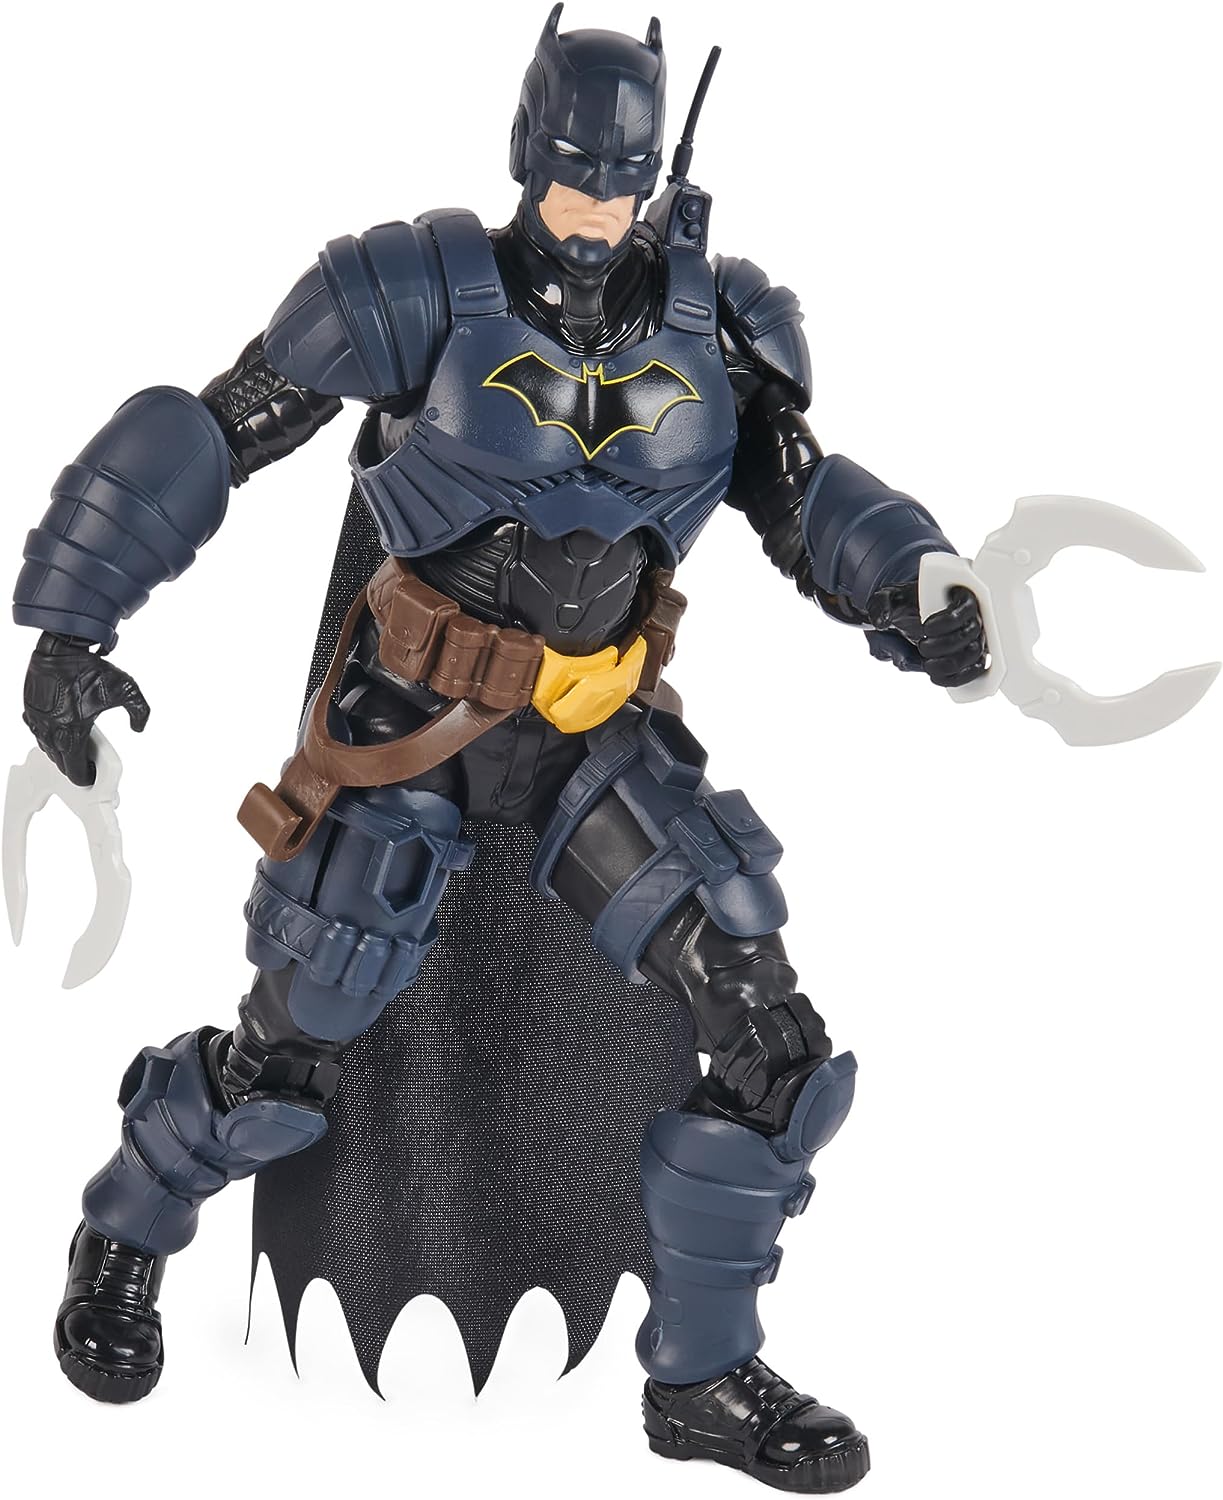 DC Comics: Batman Adventures Batman Action Figure $14 & More + Free Shipping w/ Prime or on $35+